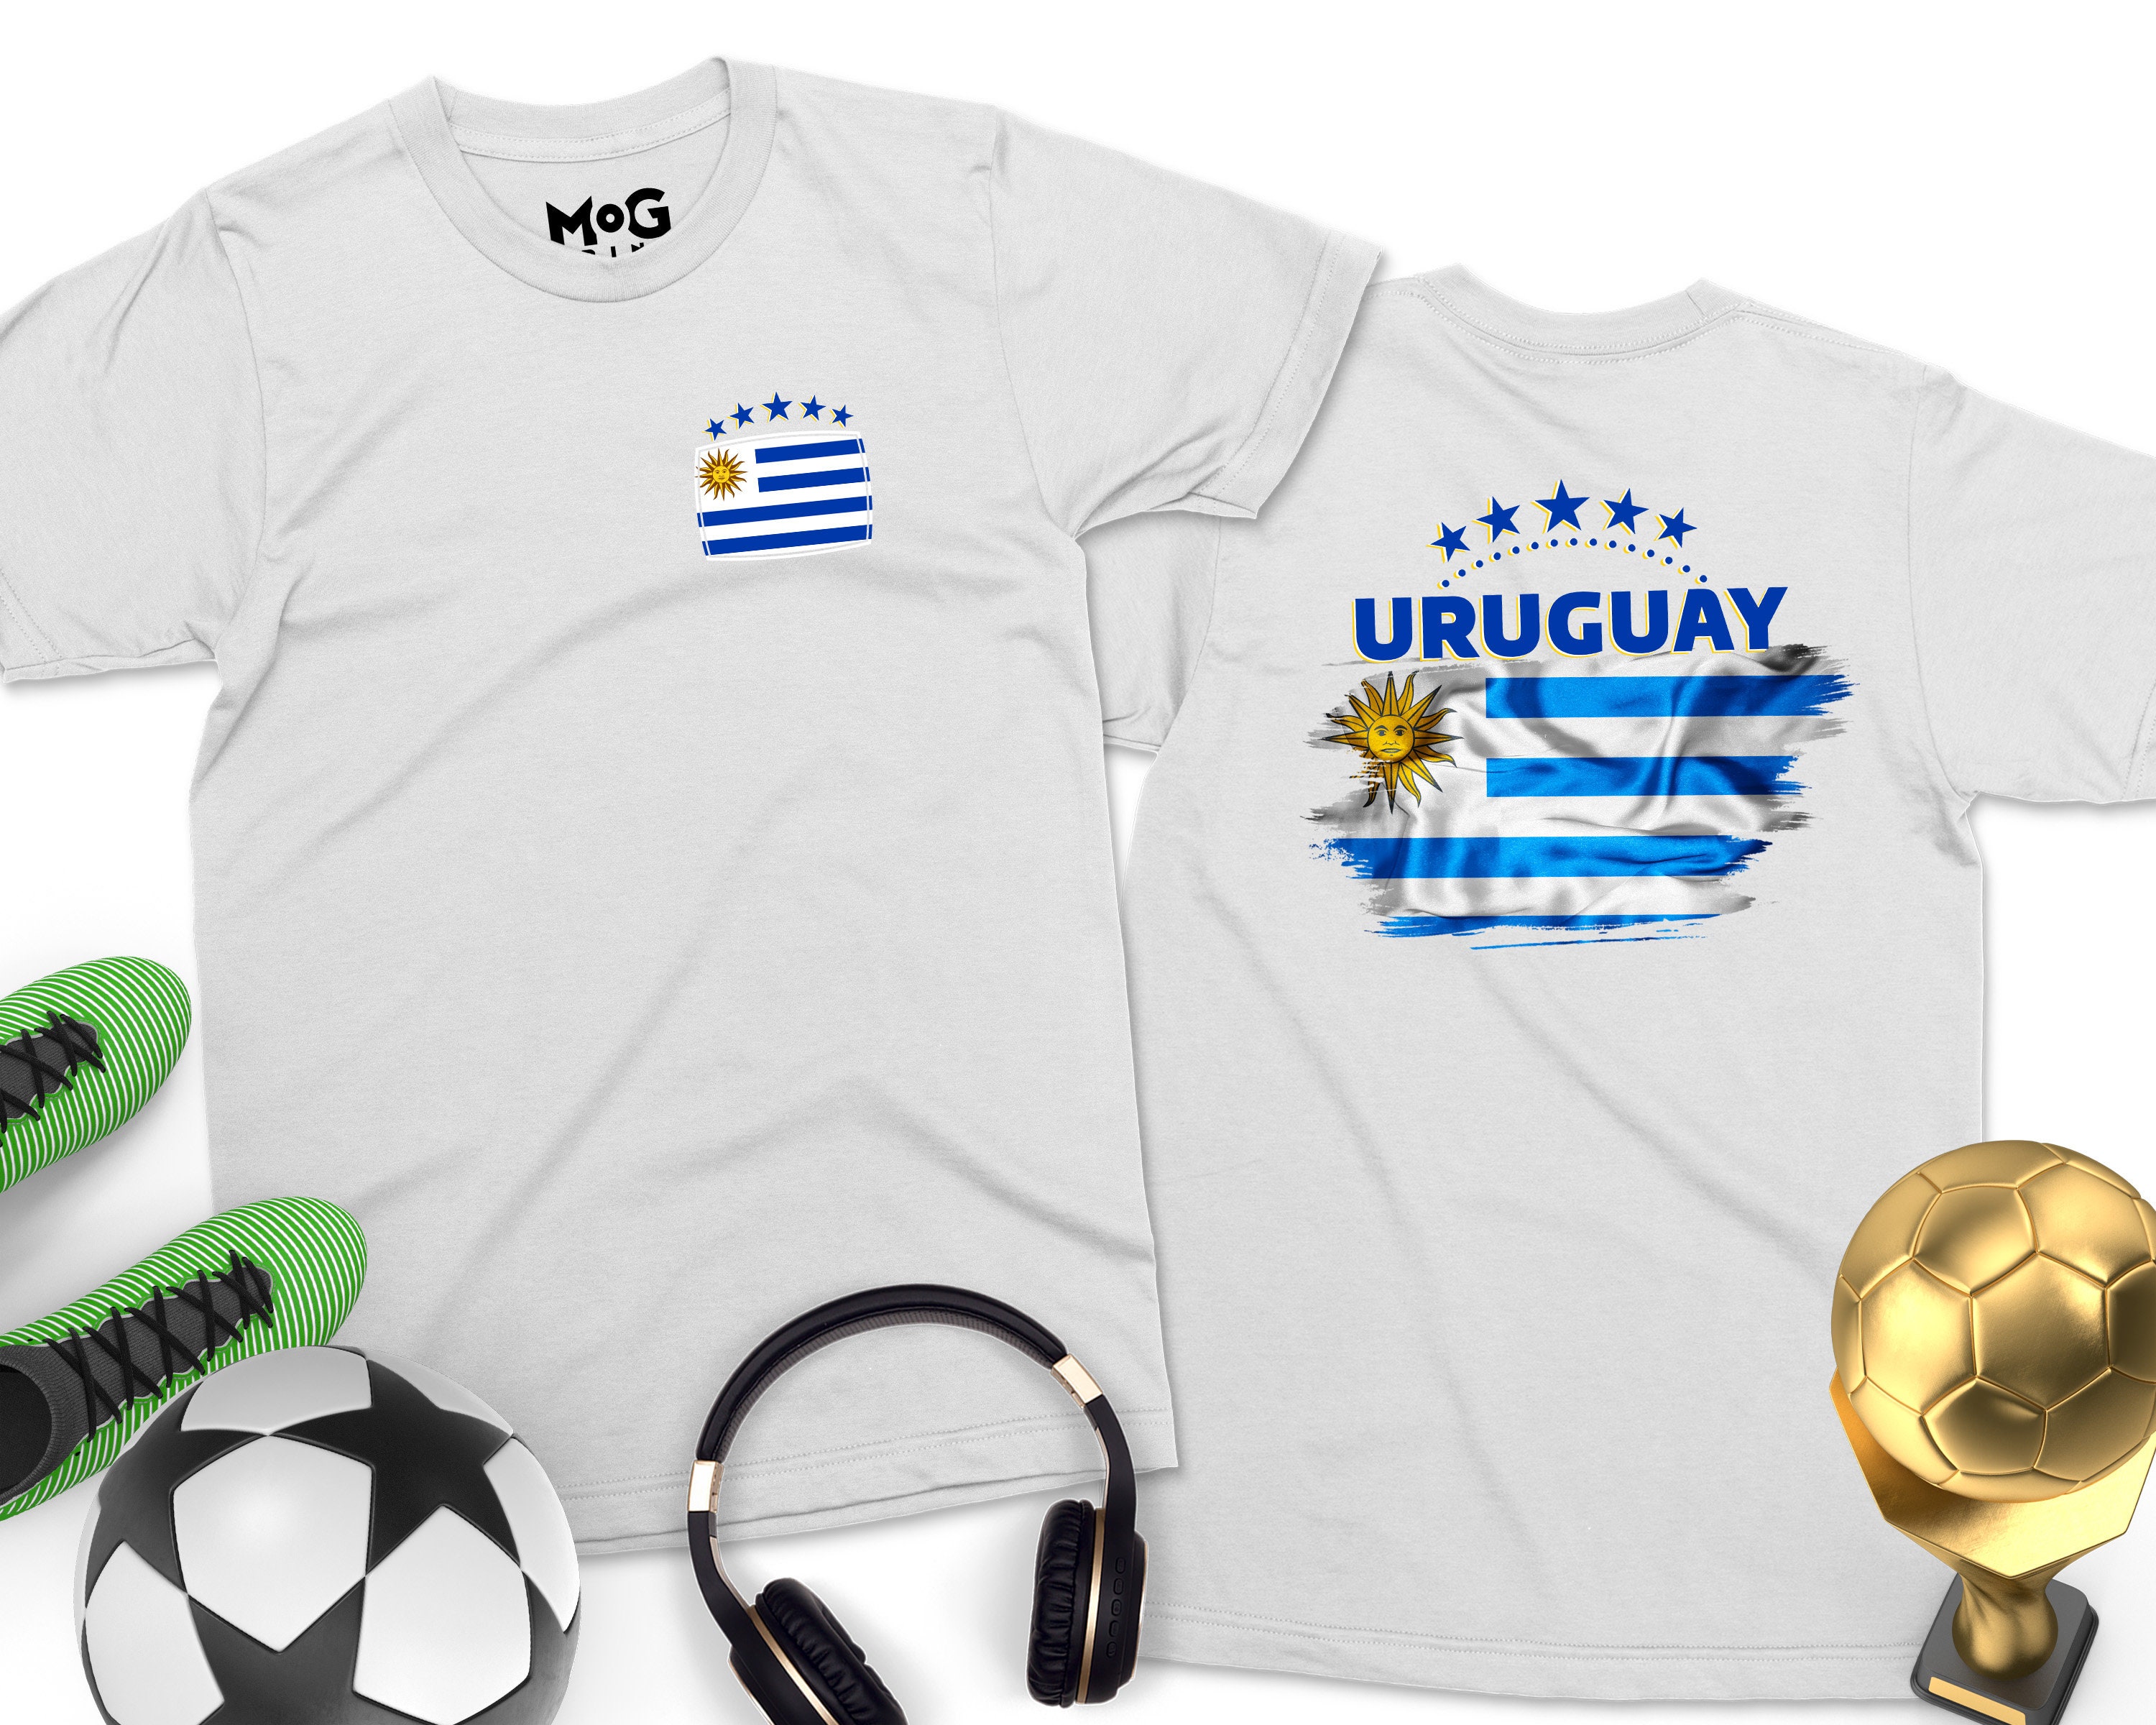 C.N.deF. CNdeF Club Nacional de Futbol Football Soccer Patch Shield Uruguay  FIFA